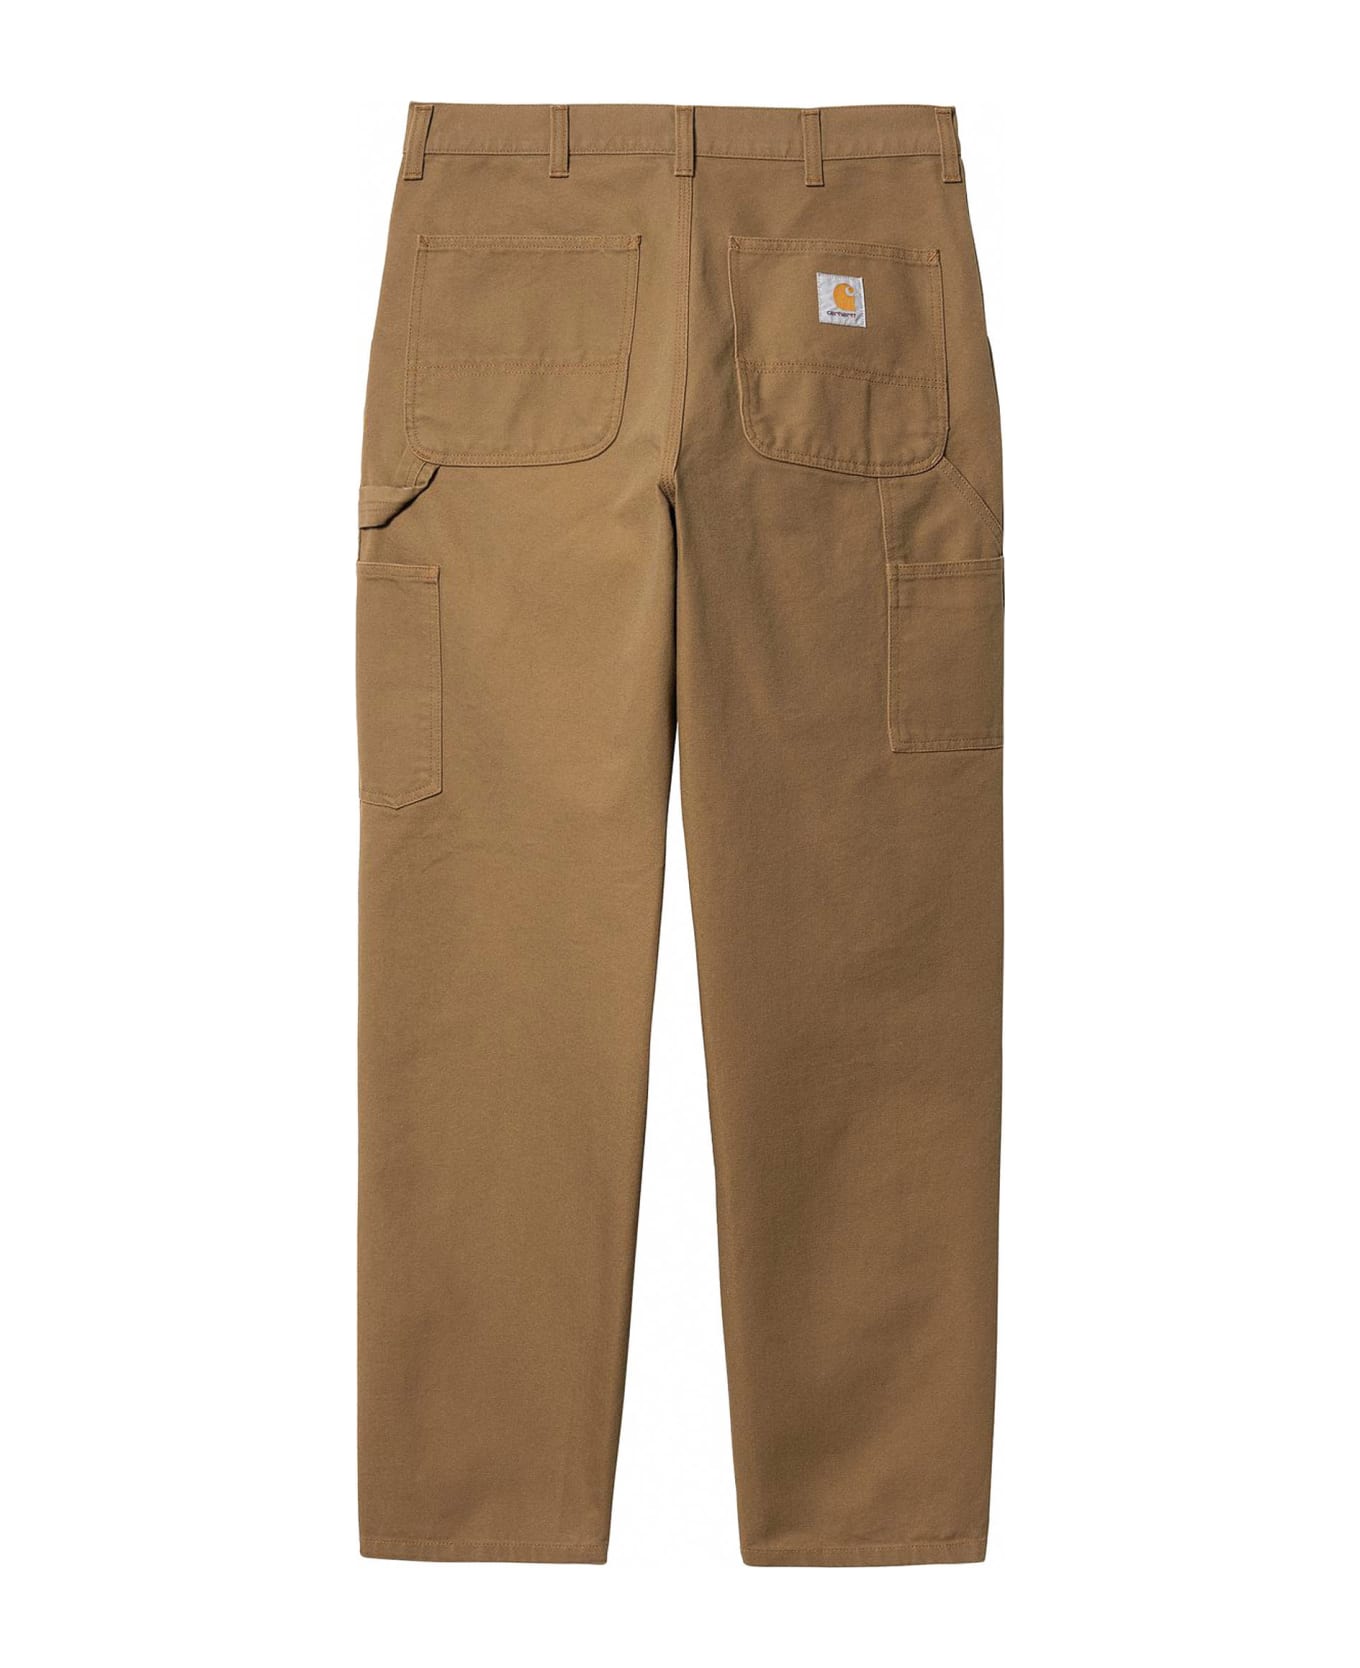 Carhartt Brown Organic Cotton Jeans - Marrone ボトムス